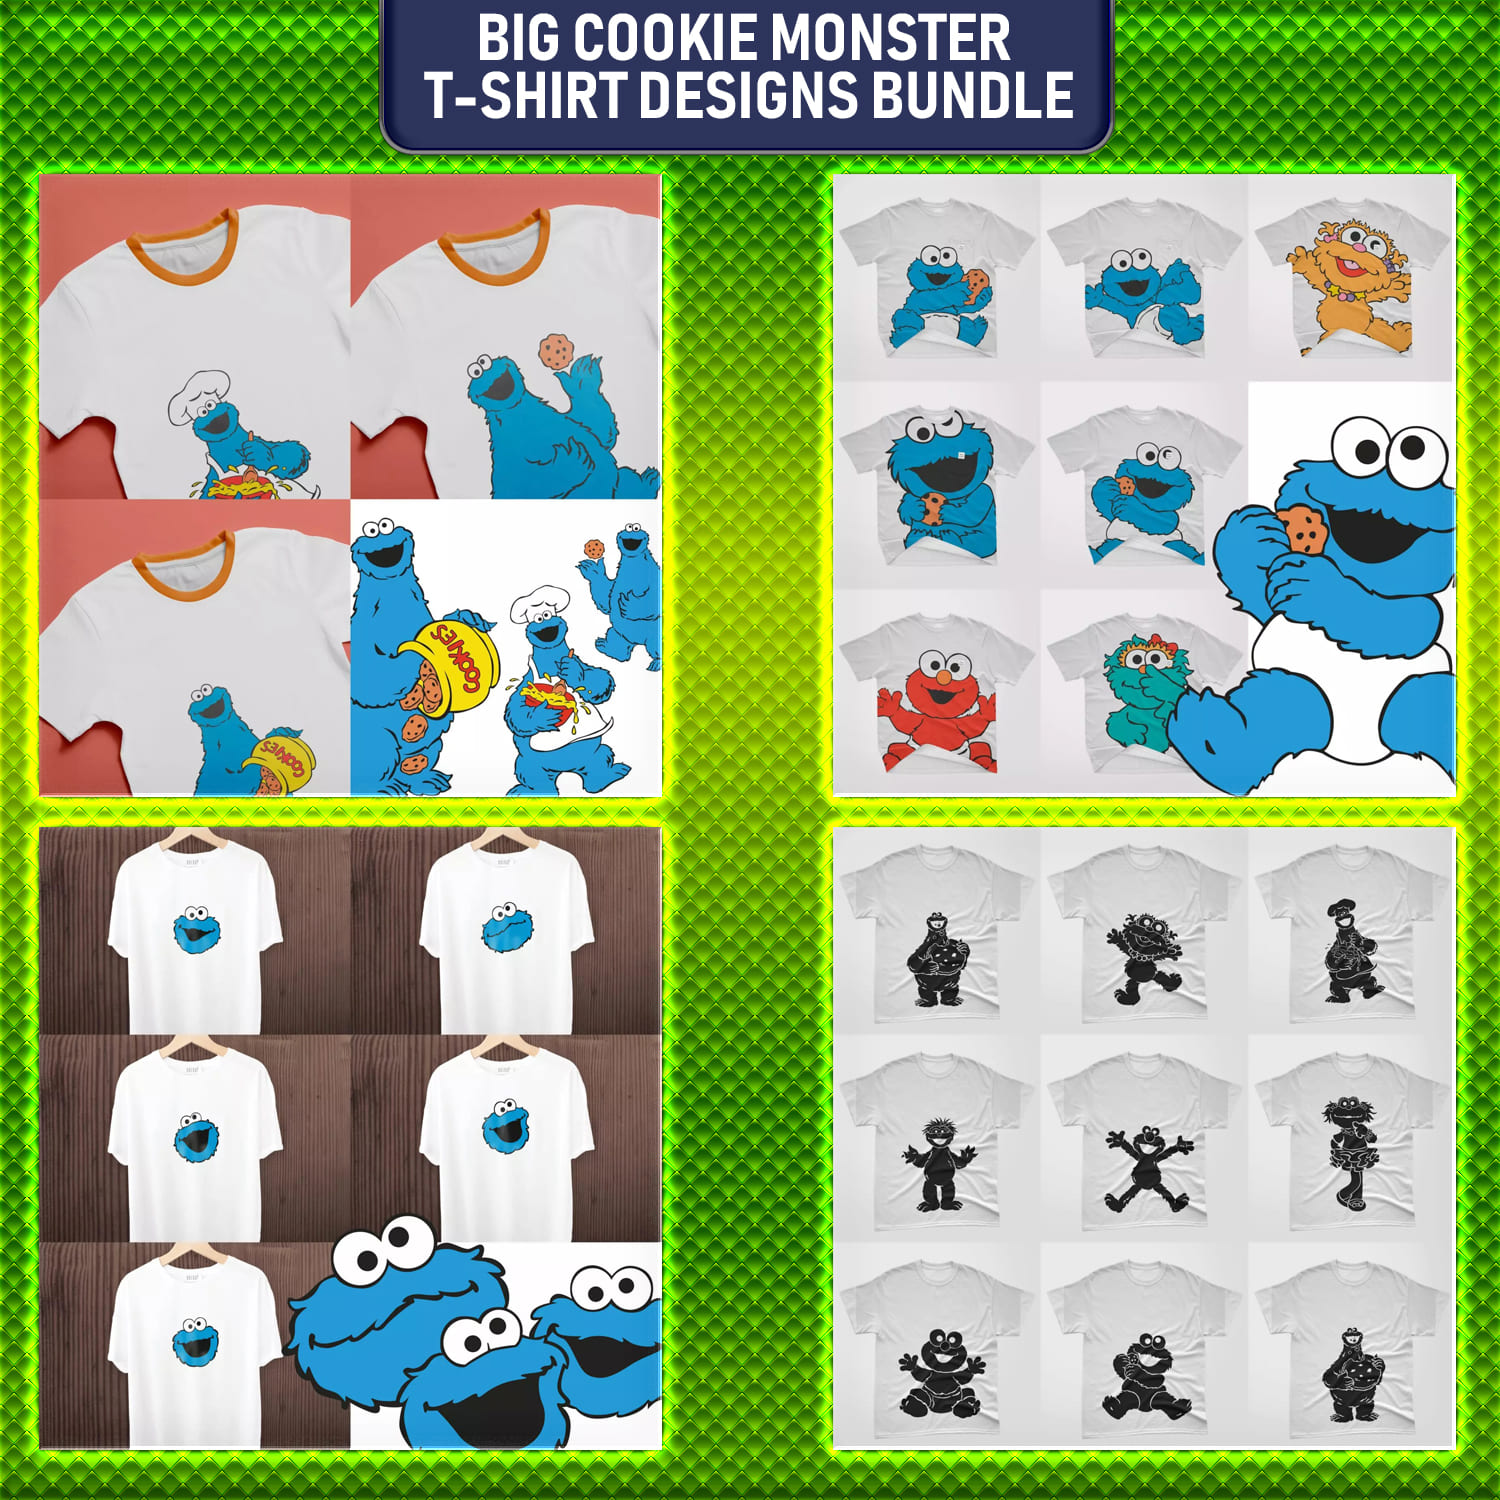 Preview big cookie monster t shirt designs bundle.